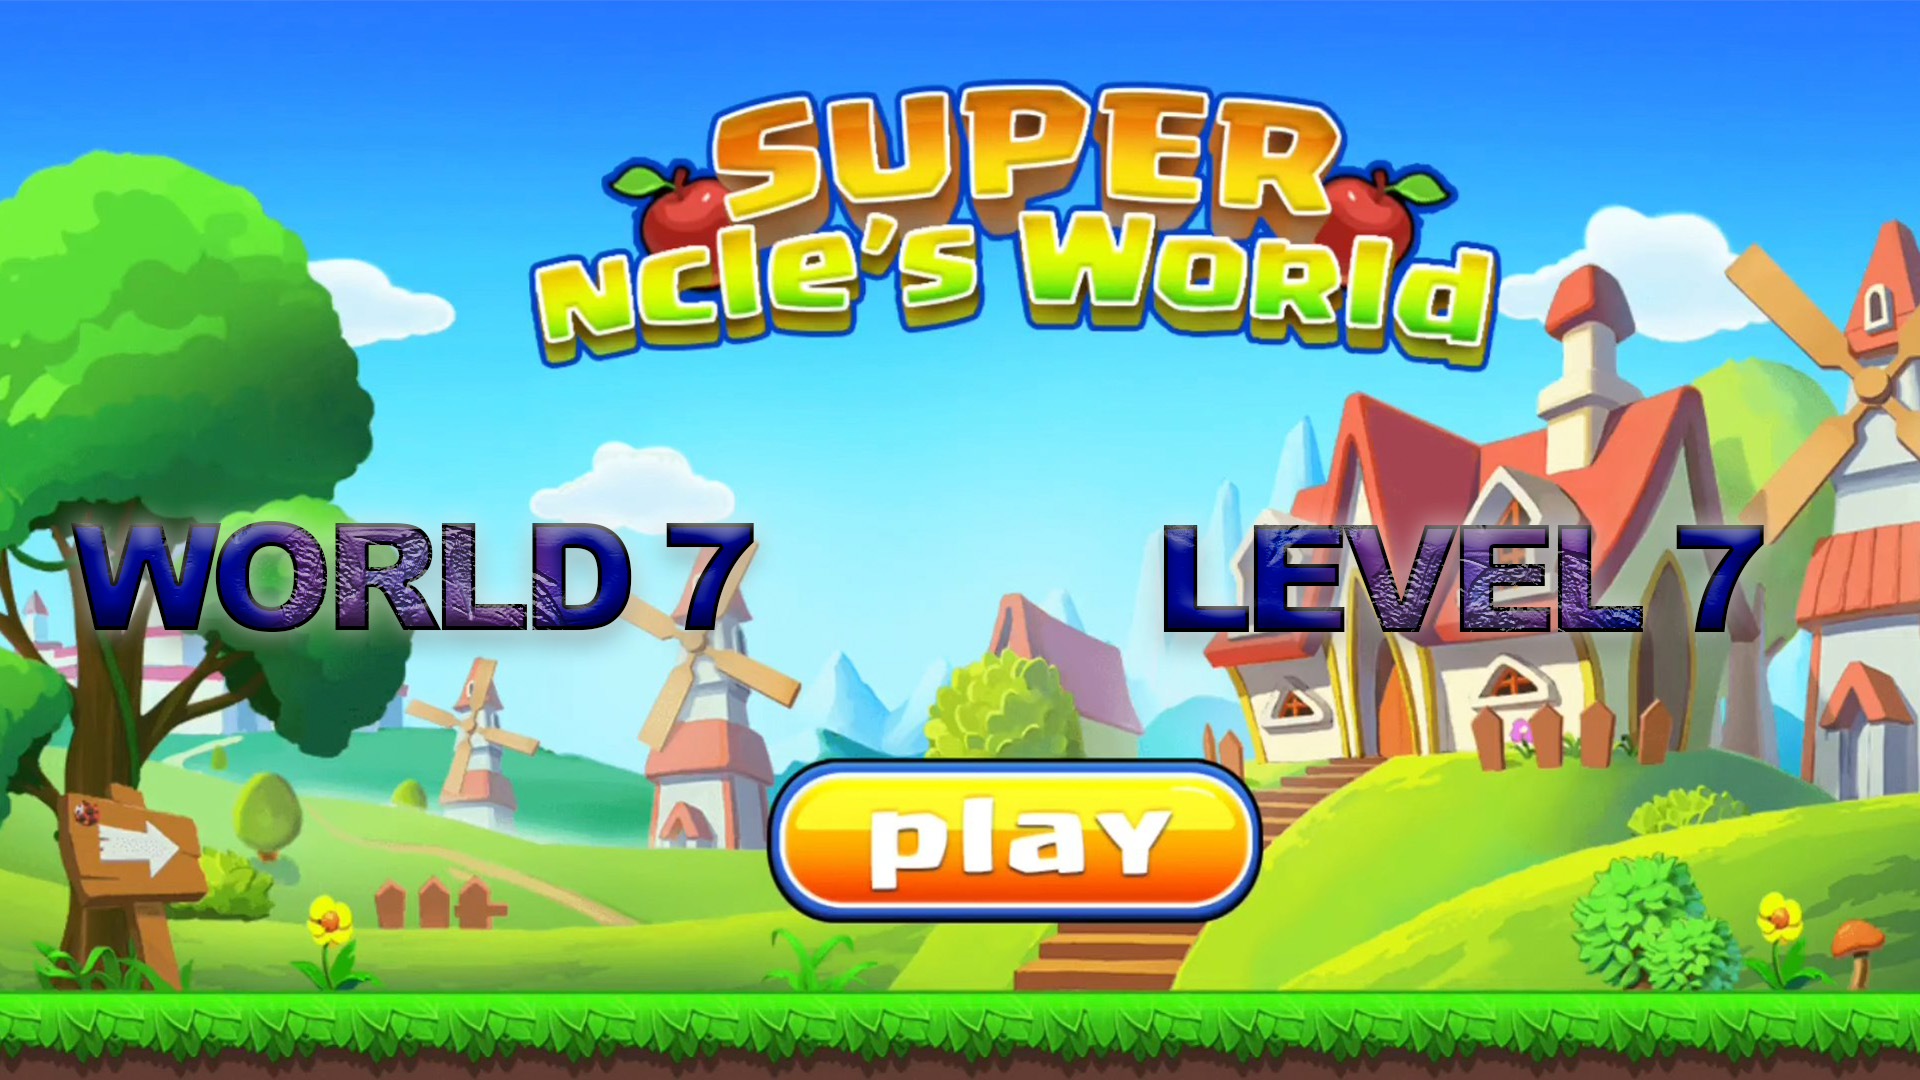 Super ncle's  World 7. Level 7.